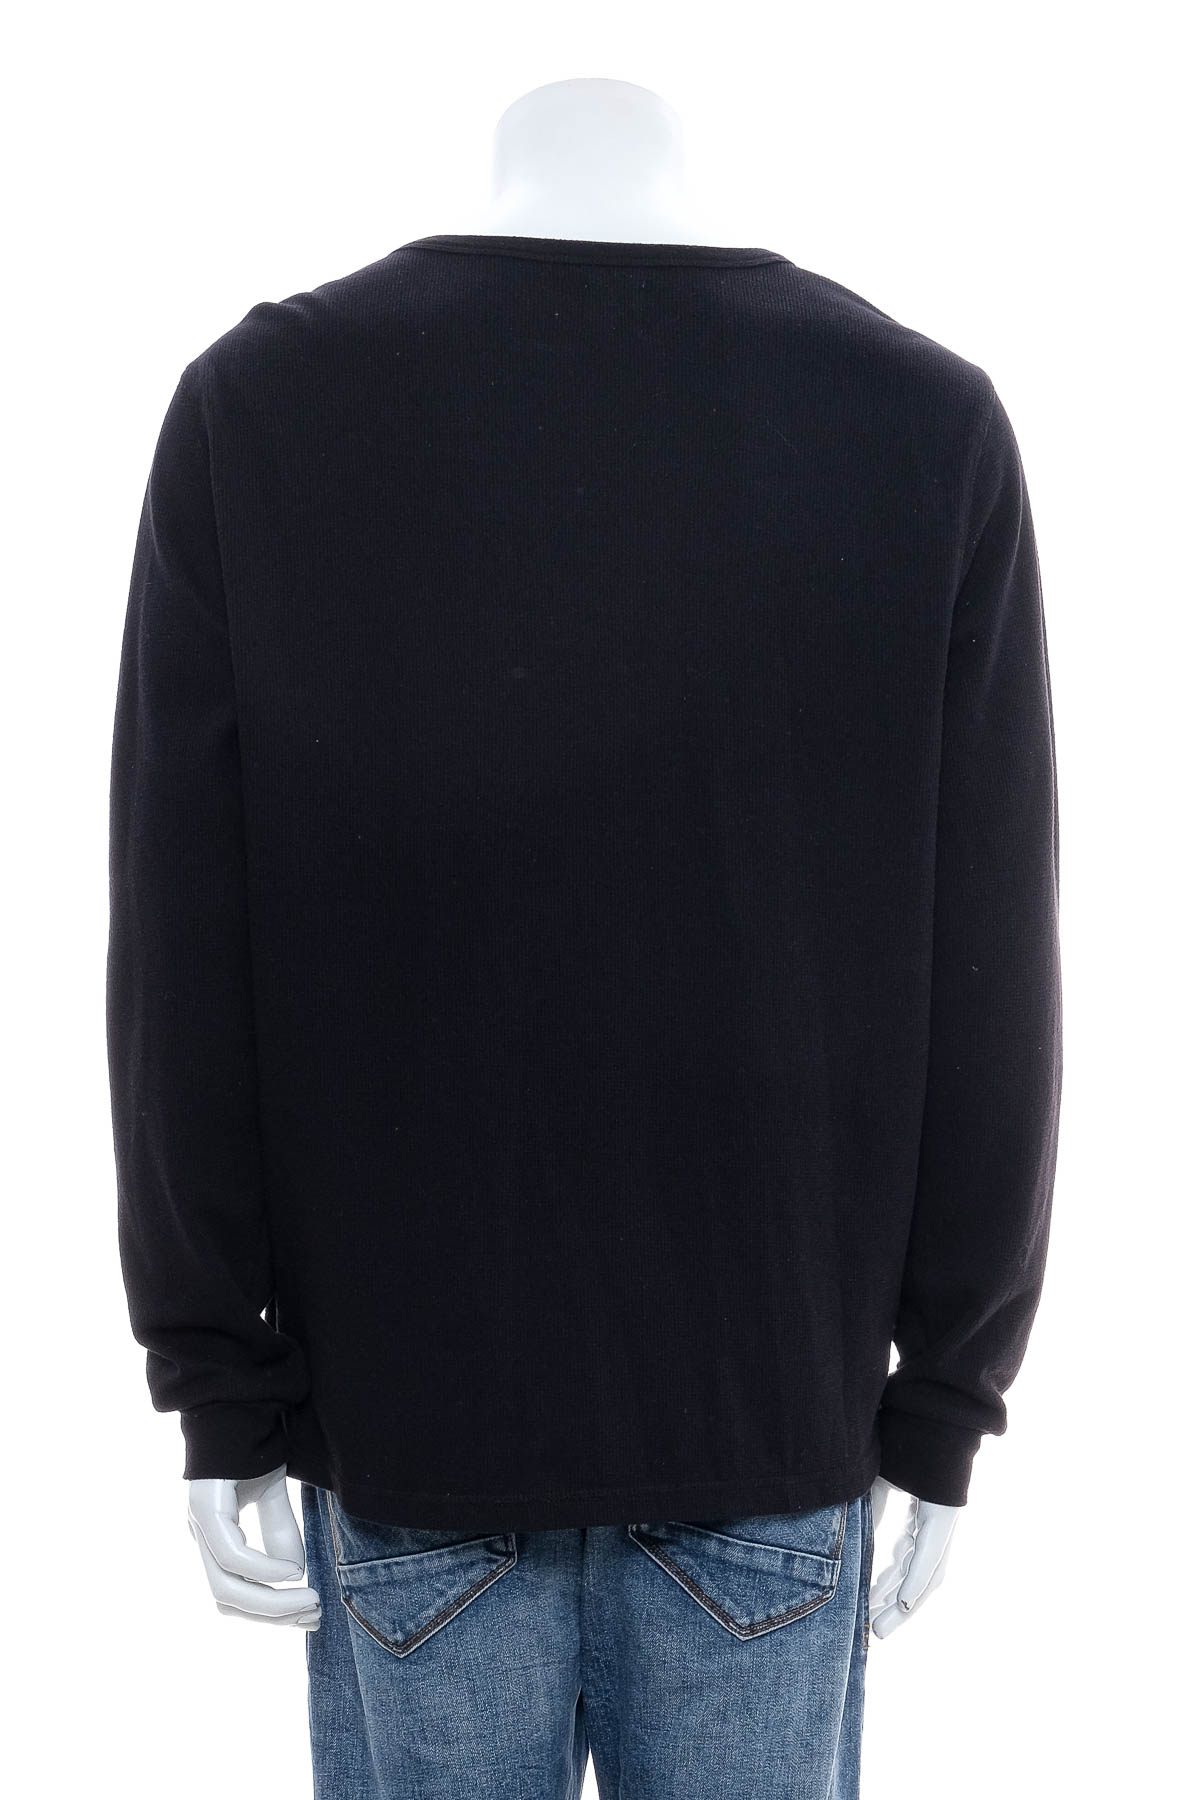 Men's sweater - CORE - 1